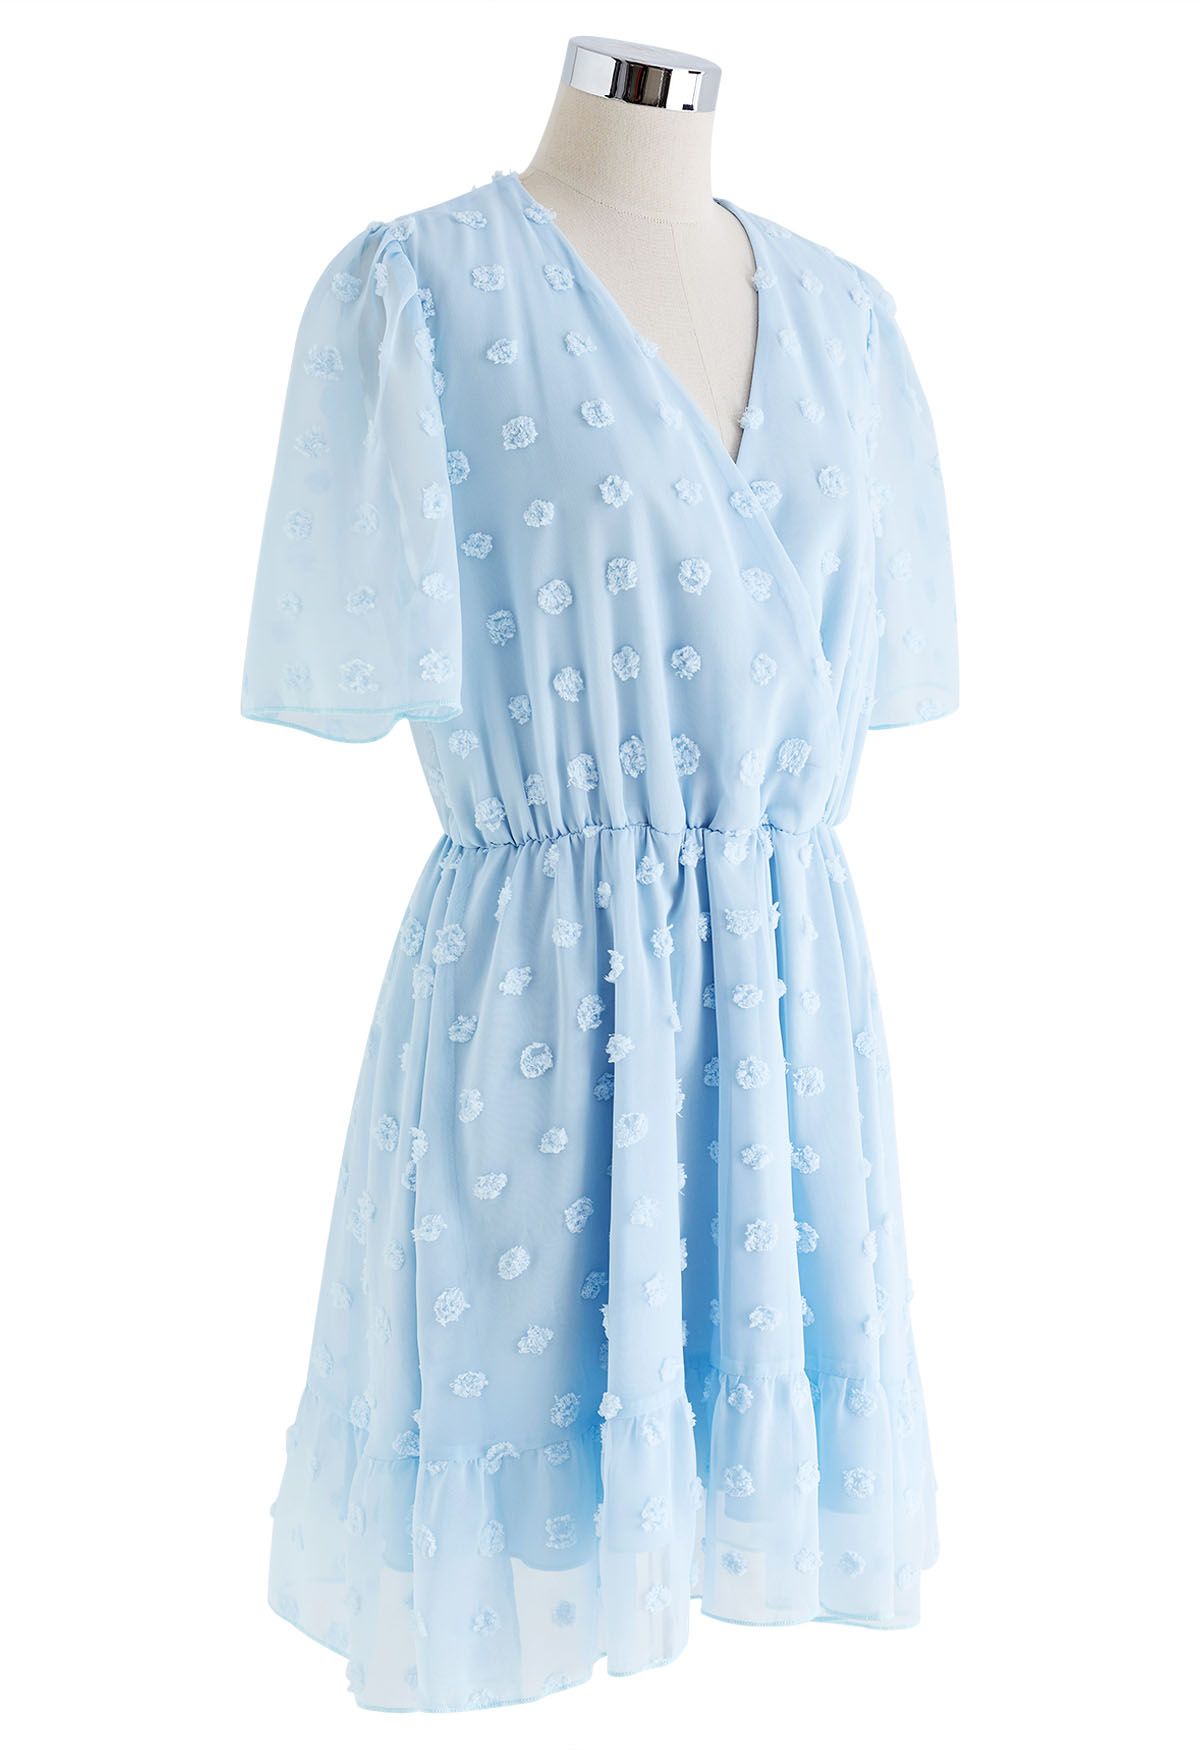 Cotton Candy Soft Mesh Faux Wrap Dress in Blue